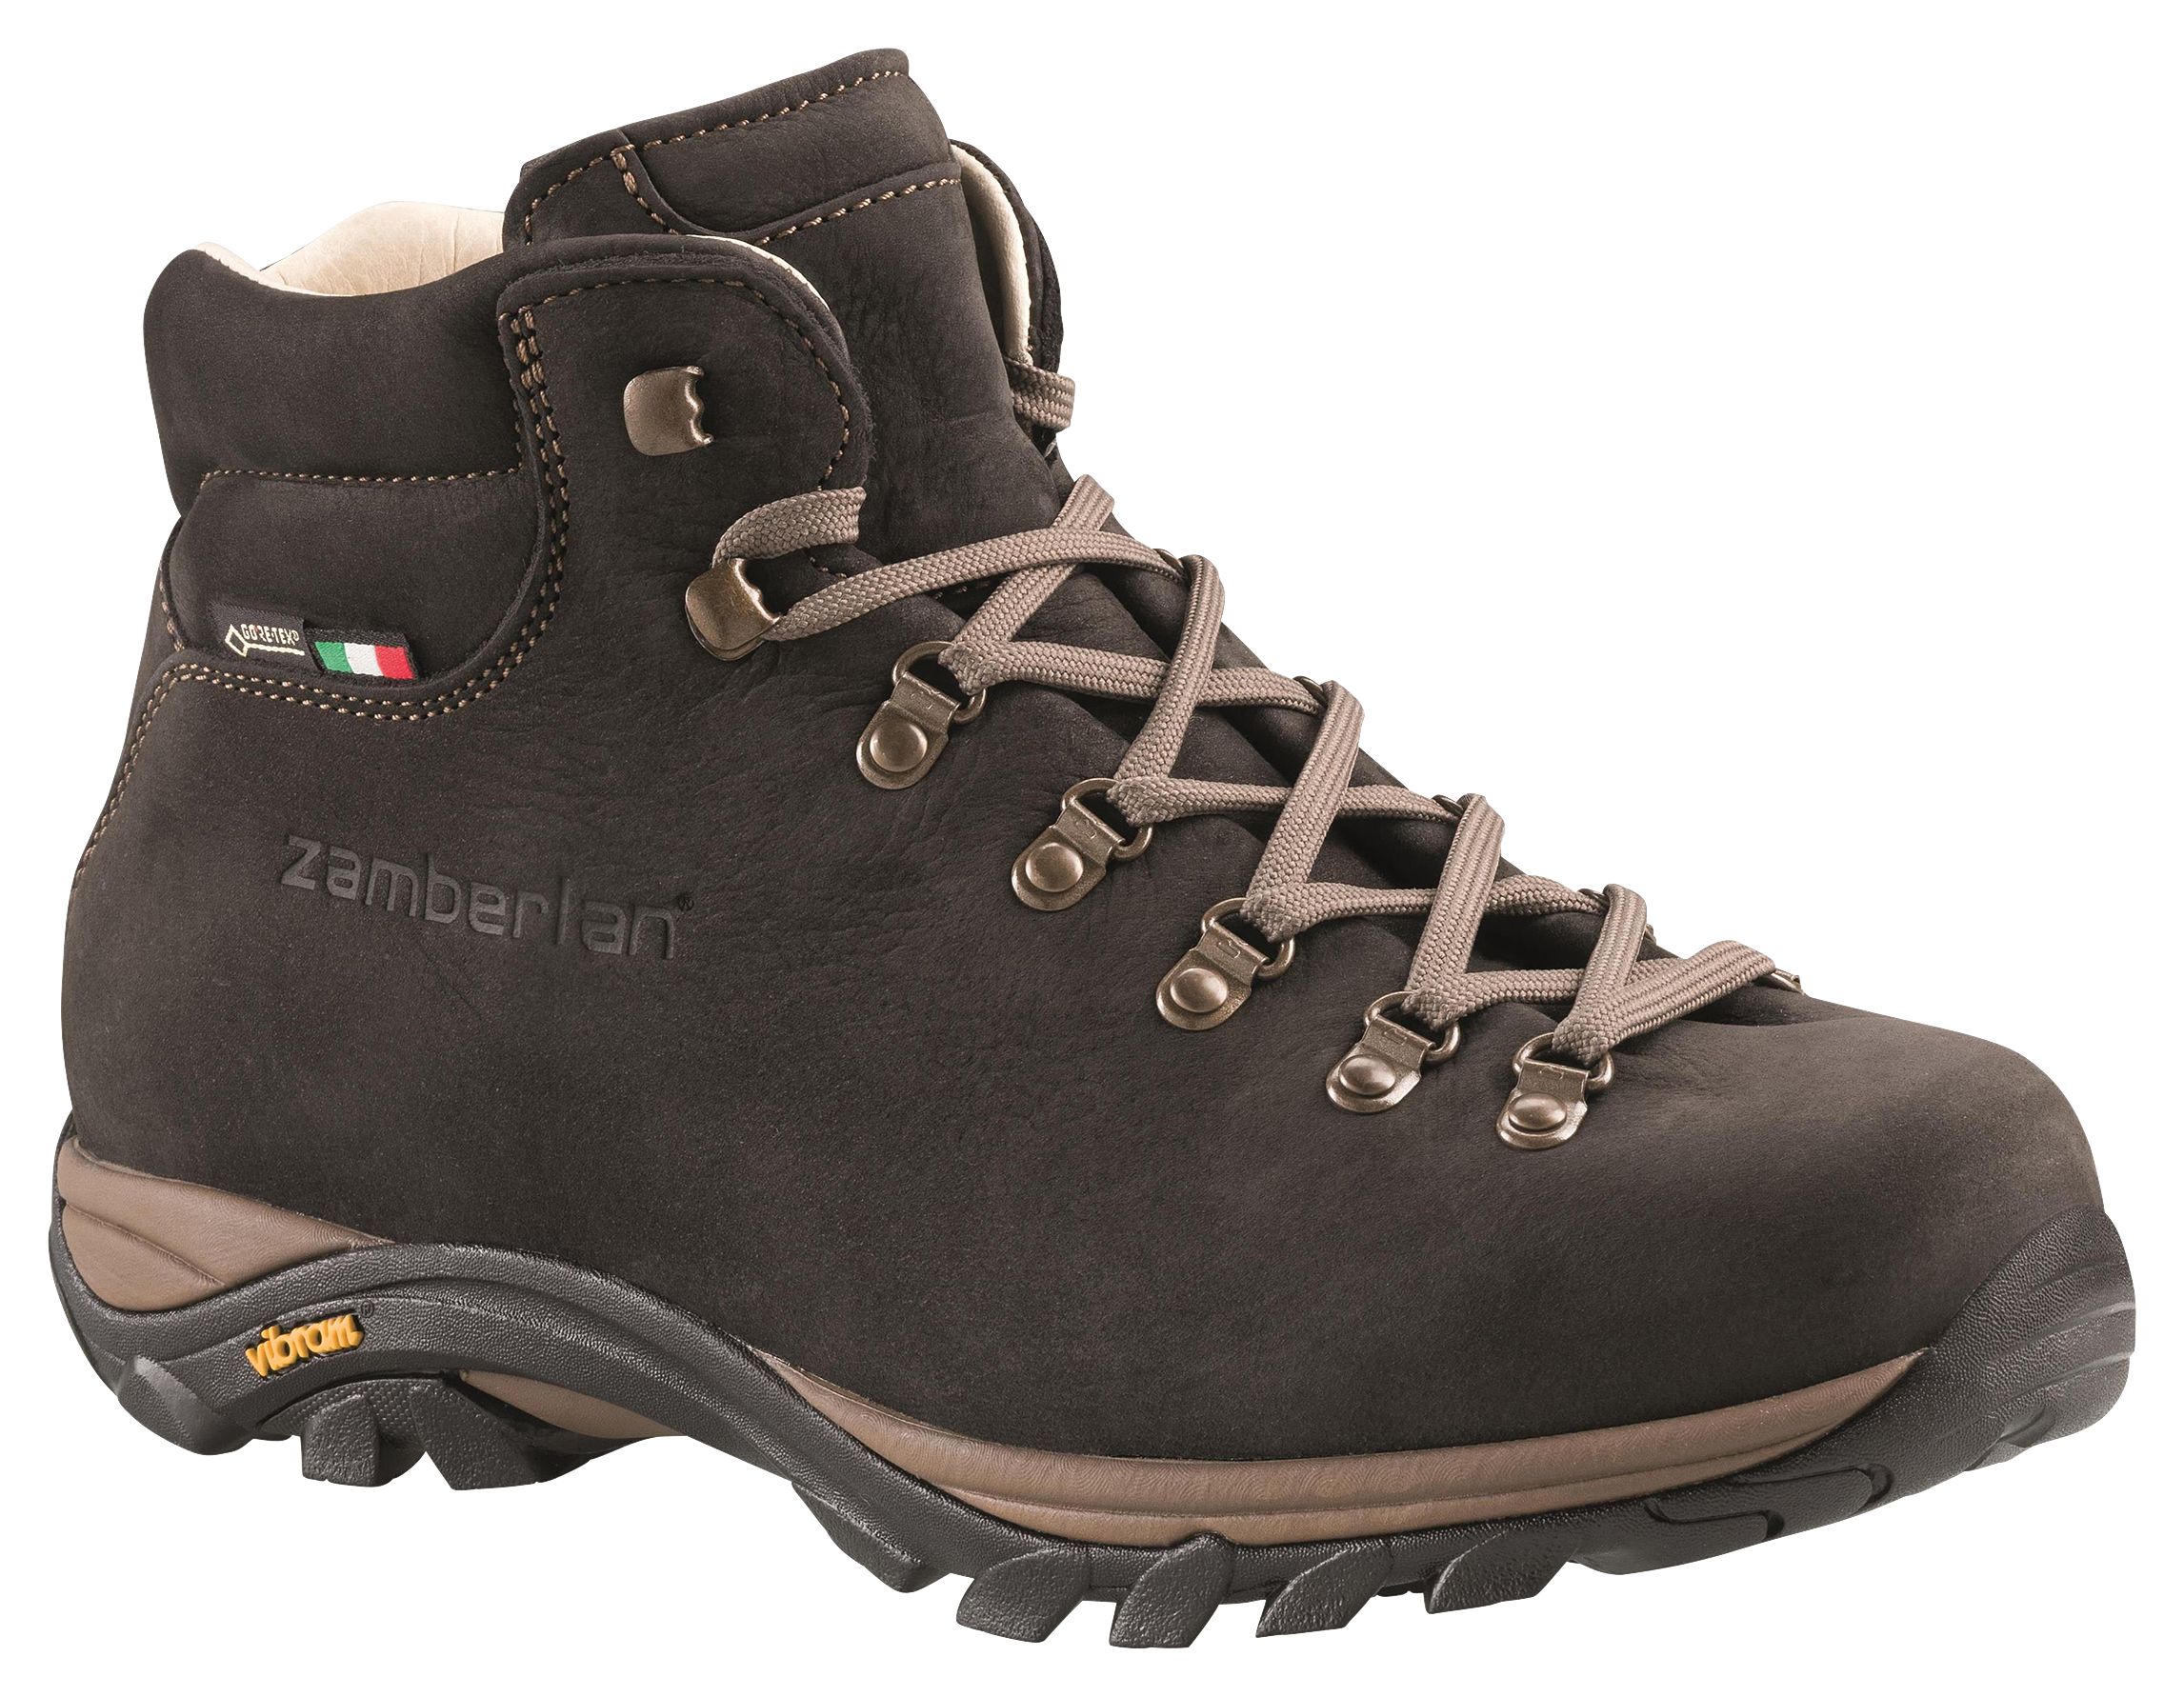 Zamberlan 320 Trail Lite EVO GTX Waterproof Hiking Boots for Men